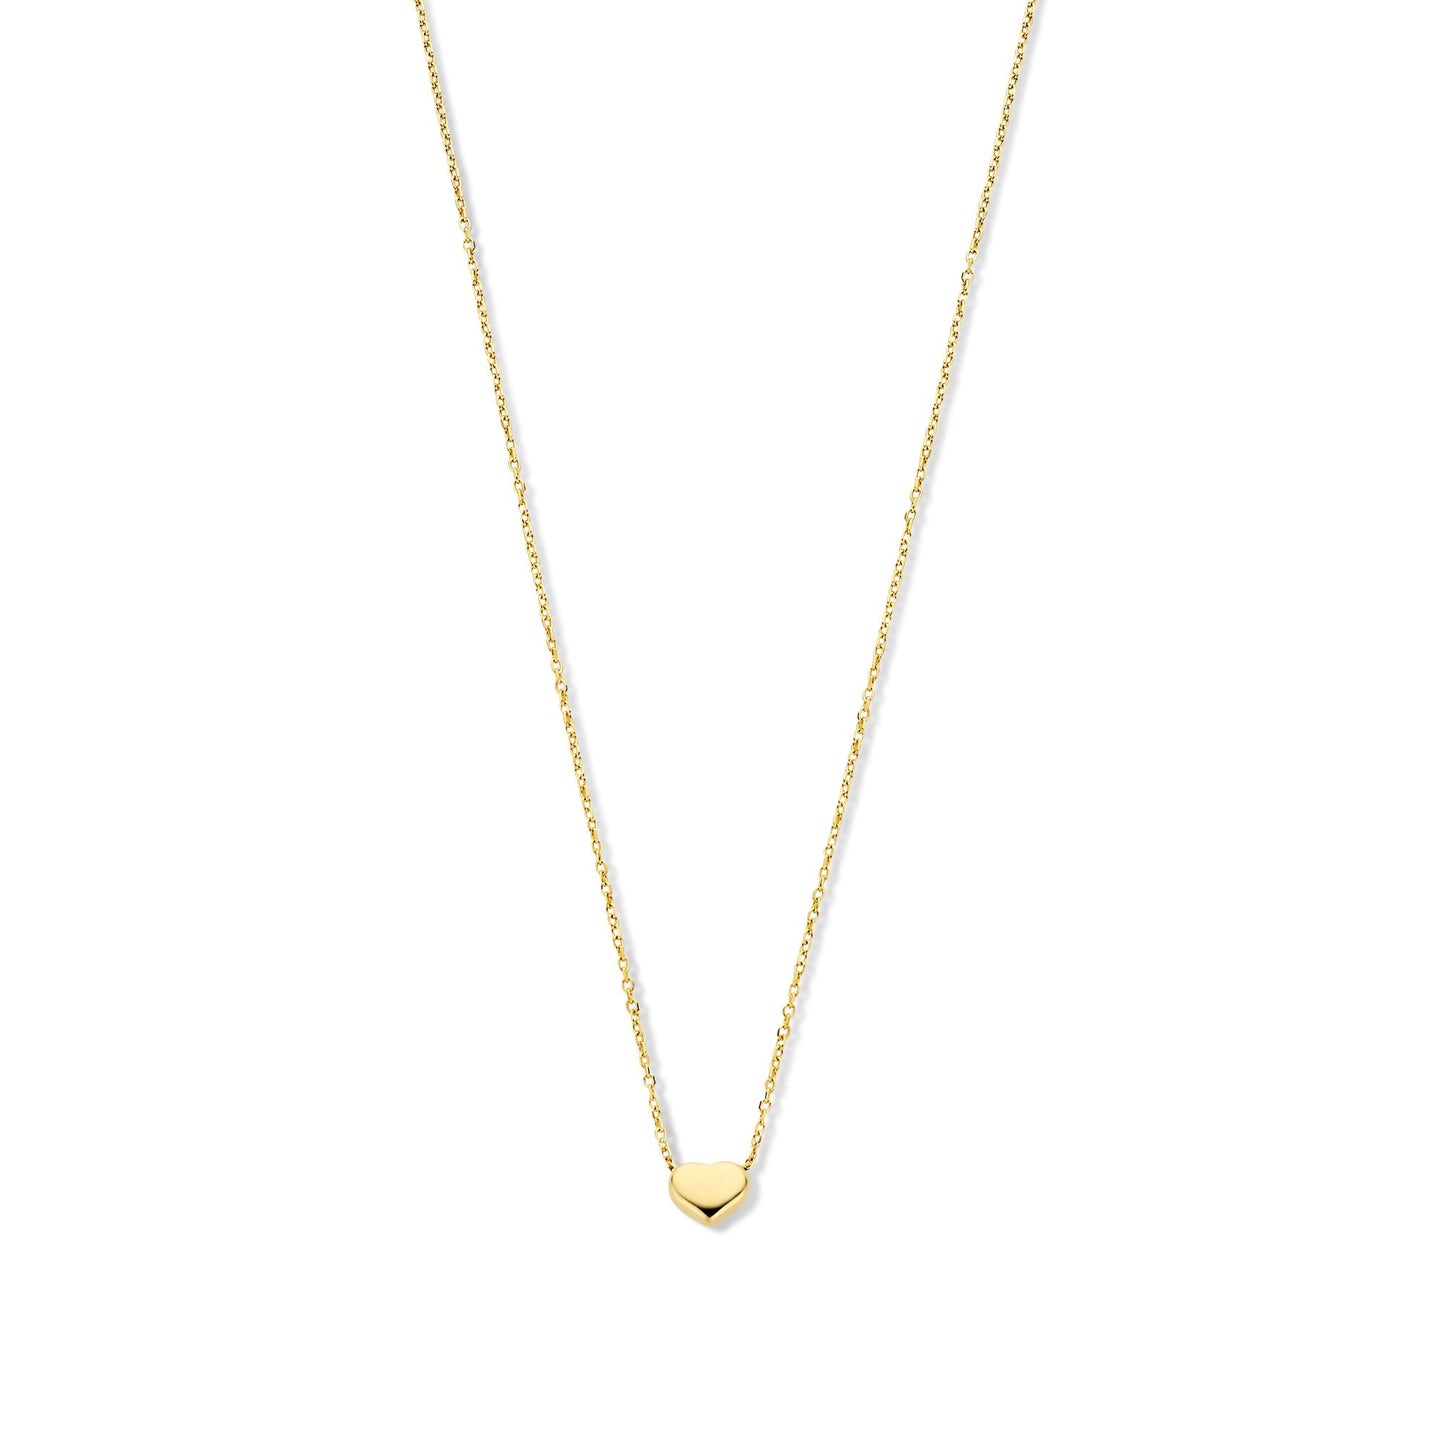 Della Spiga Giulietta 9 karat gold necklace with heart